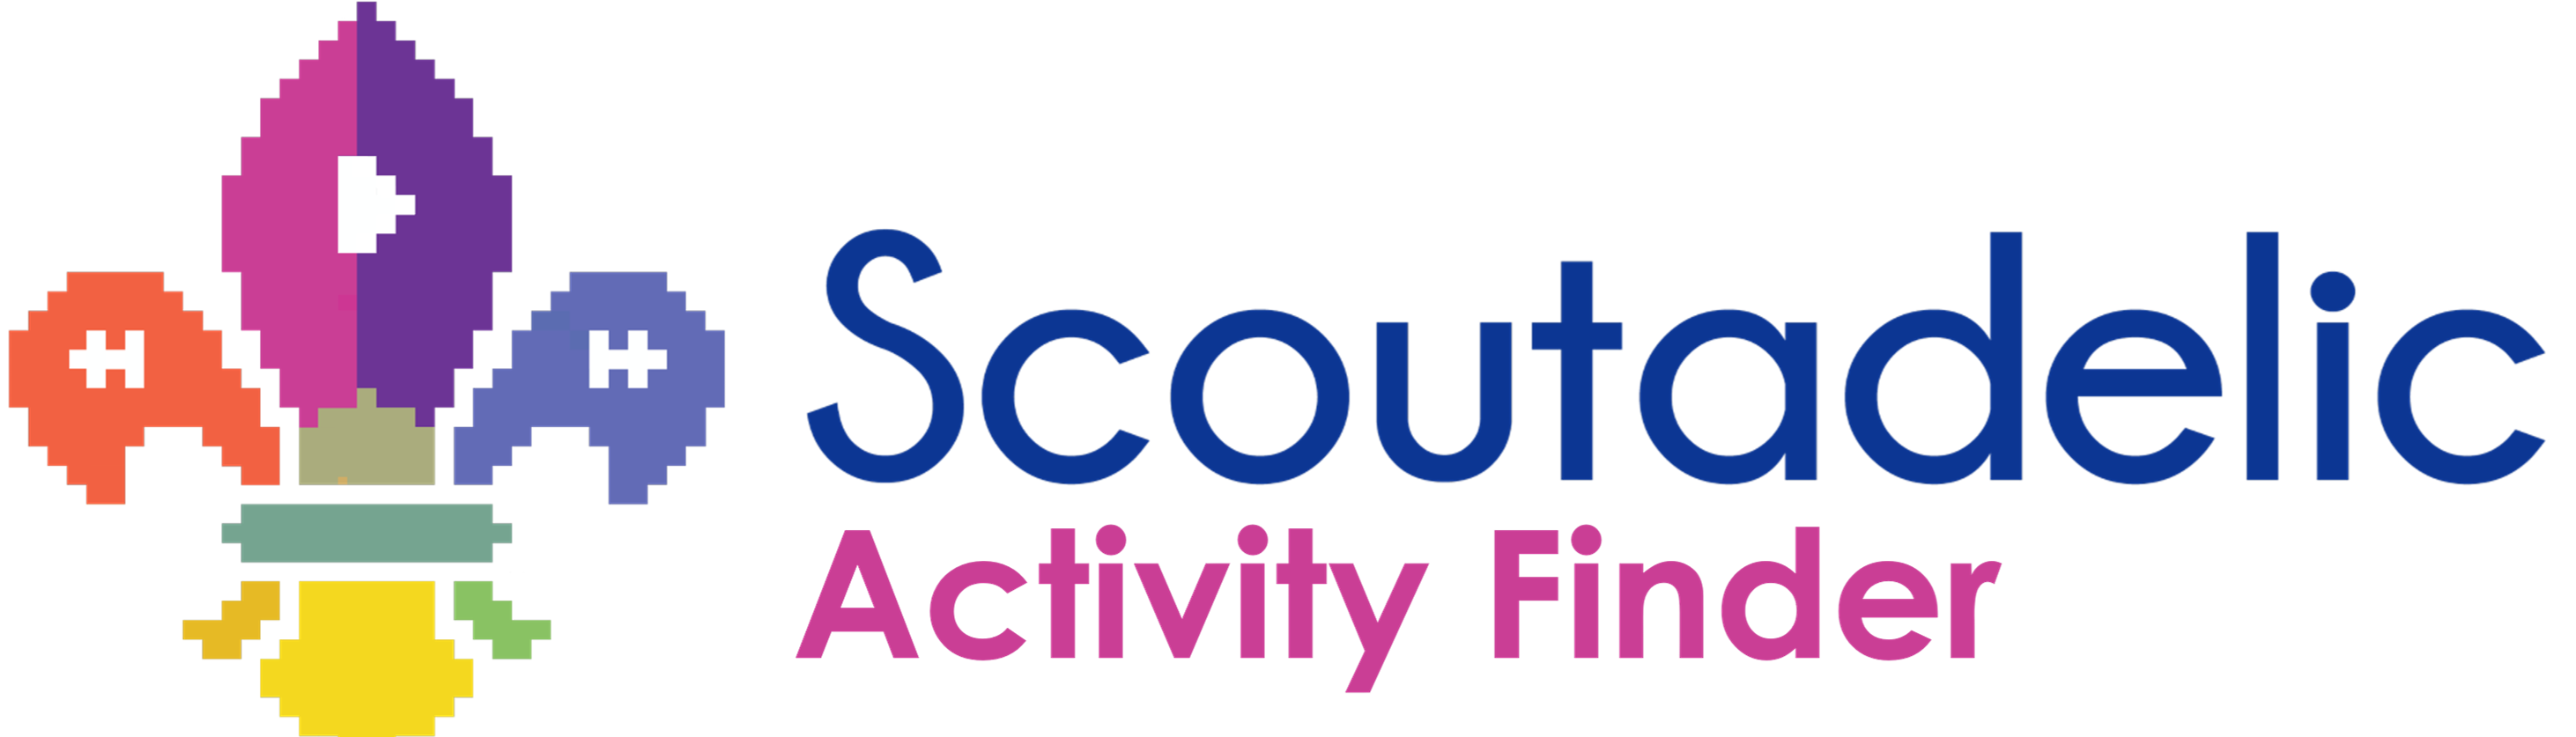 Scoutadelic Activity Finder